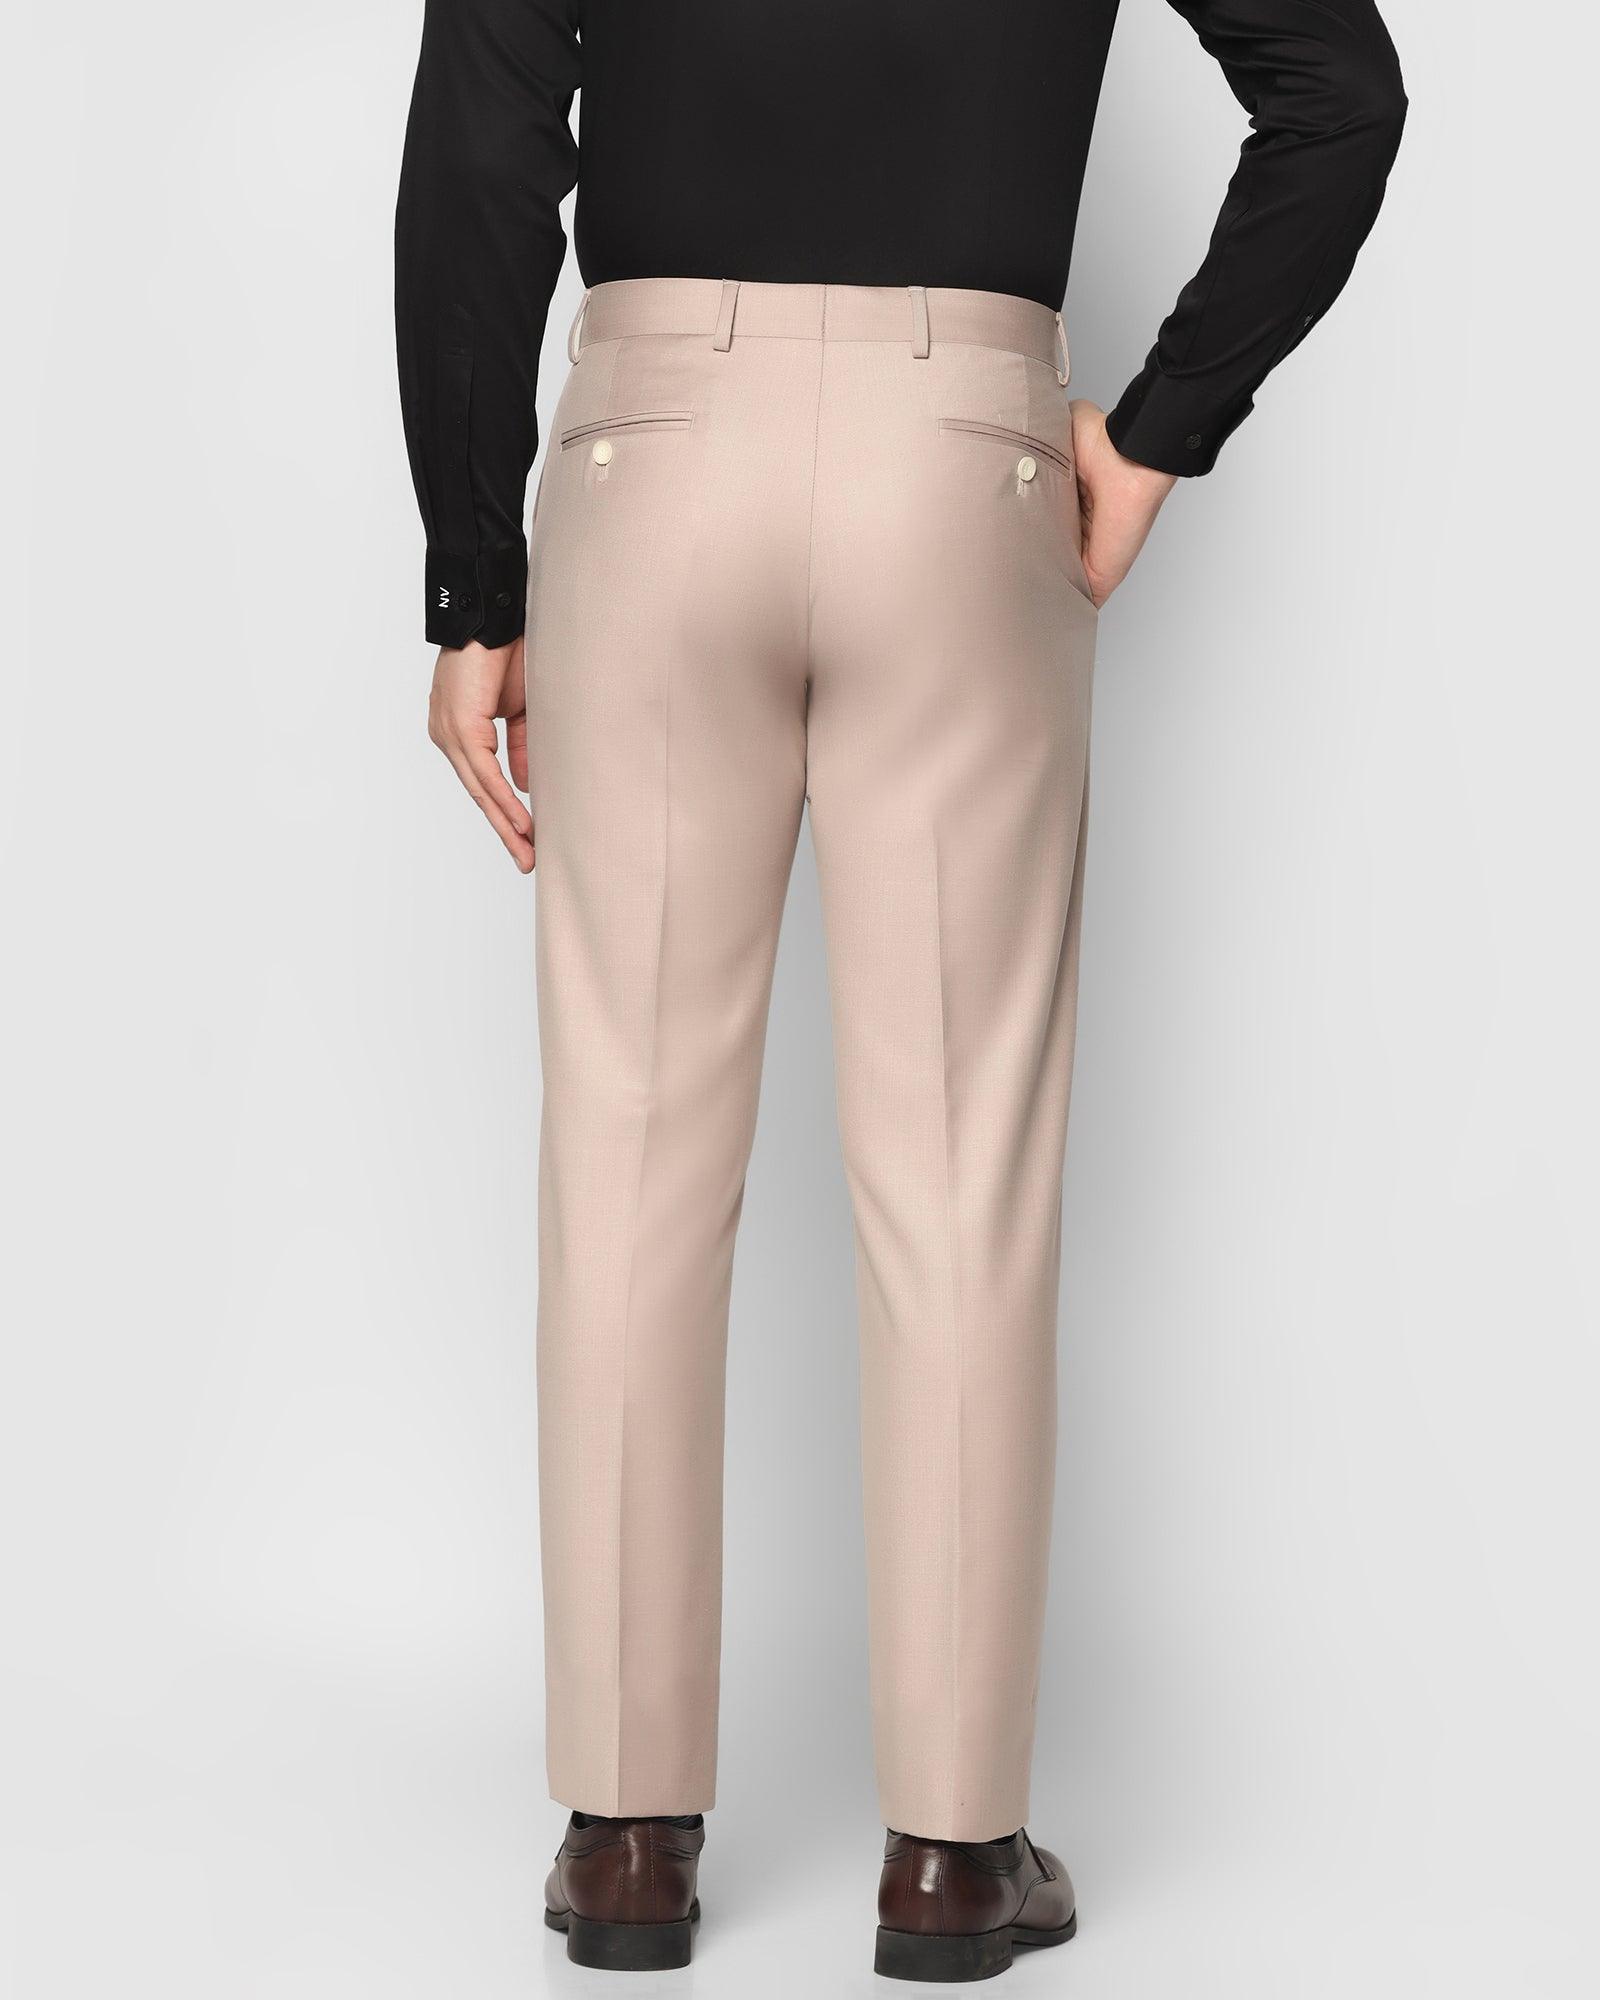 Beige Plaid Trousers - Women's Office Pants - Beige Pants - Lulus